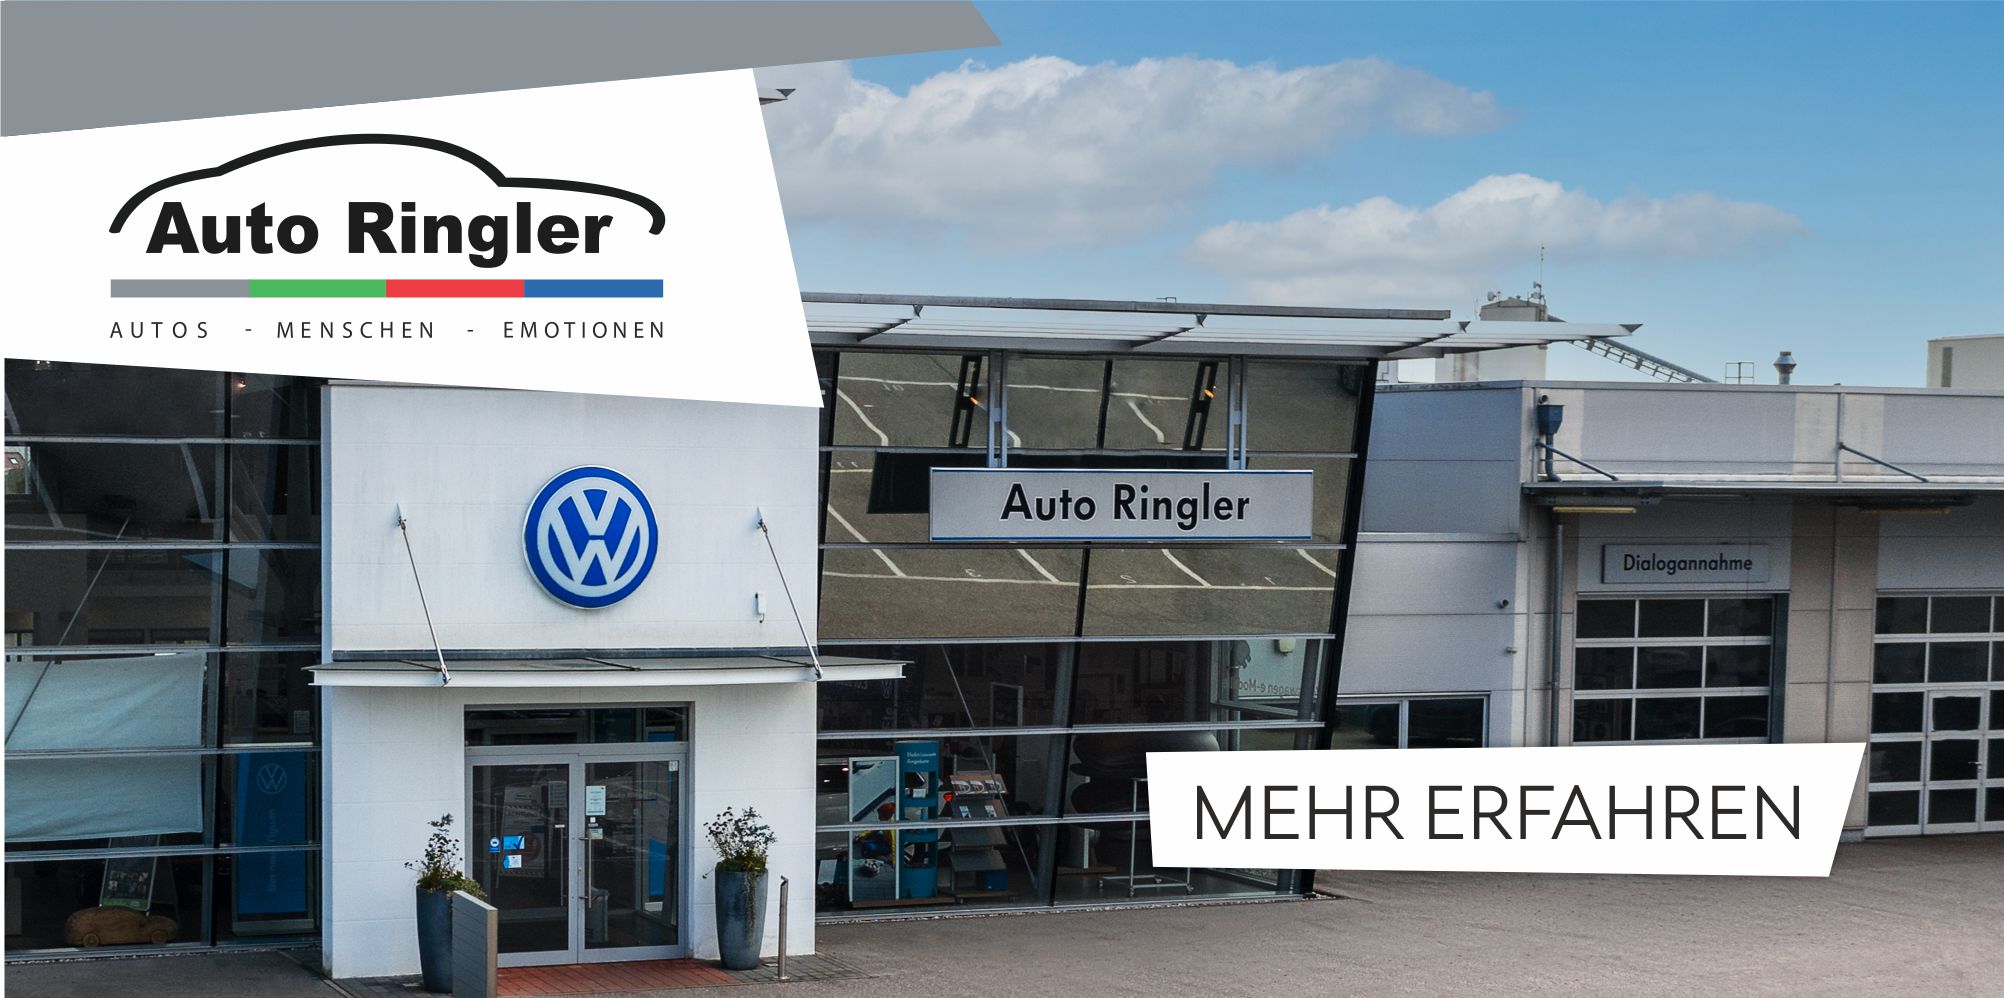 Aktionen | Schuster Gruppe - Schuster Automobile - Autohaus Ringler - Swing Autovermietung - Passau, Pocking, Ruhstorf